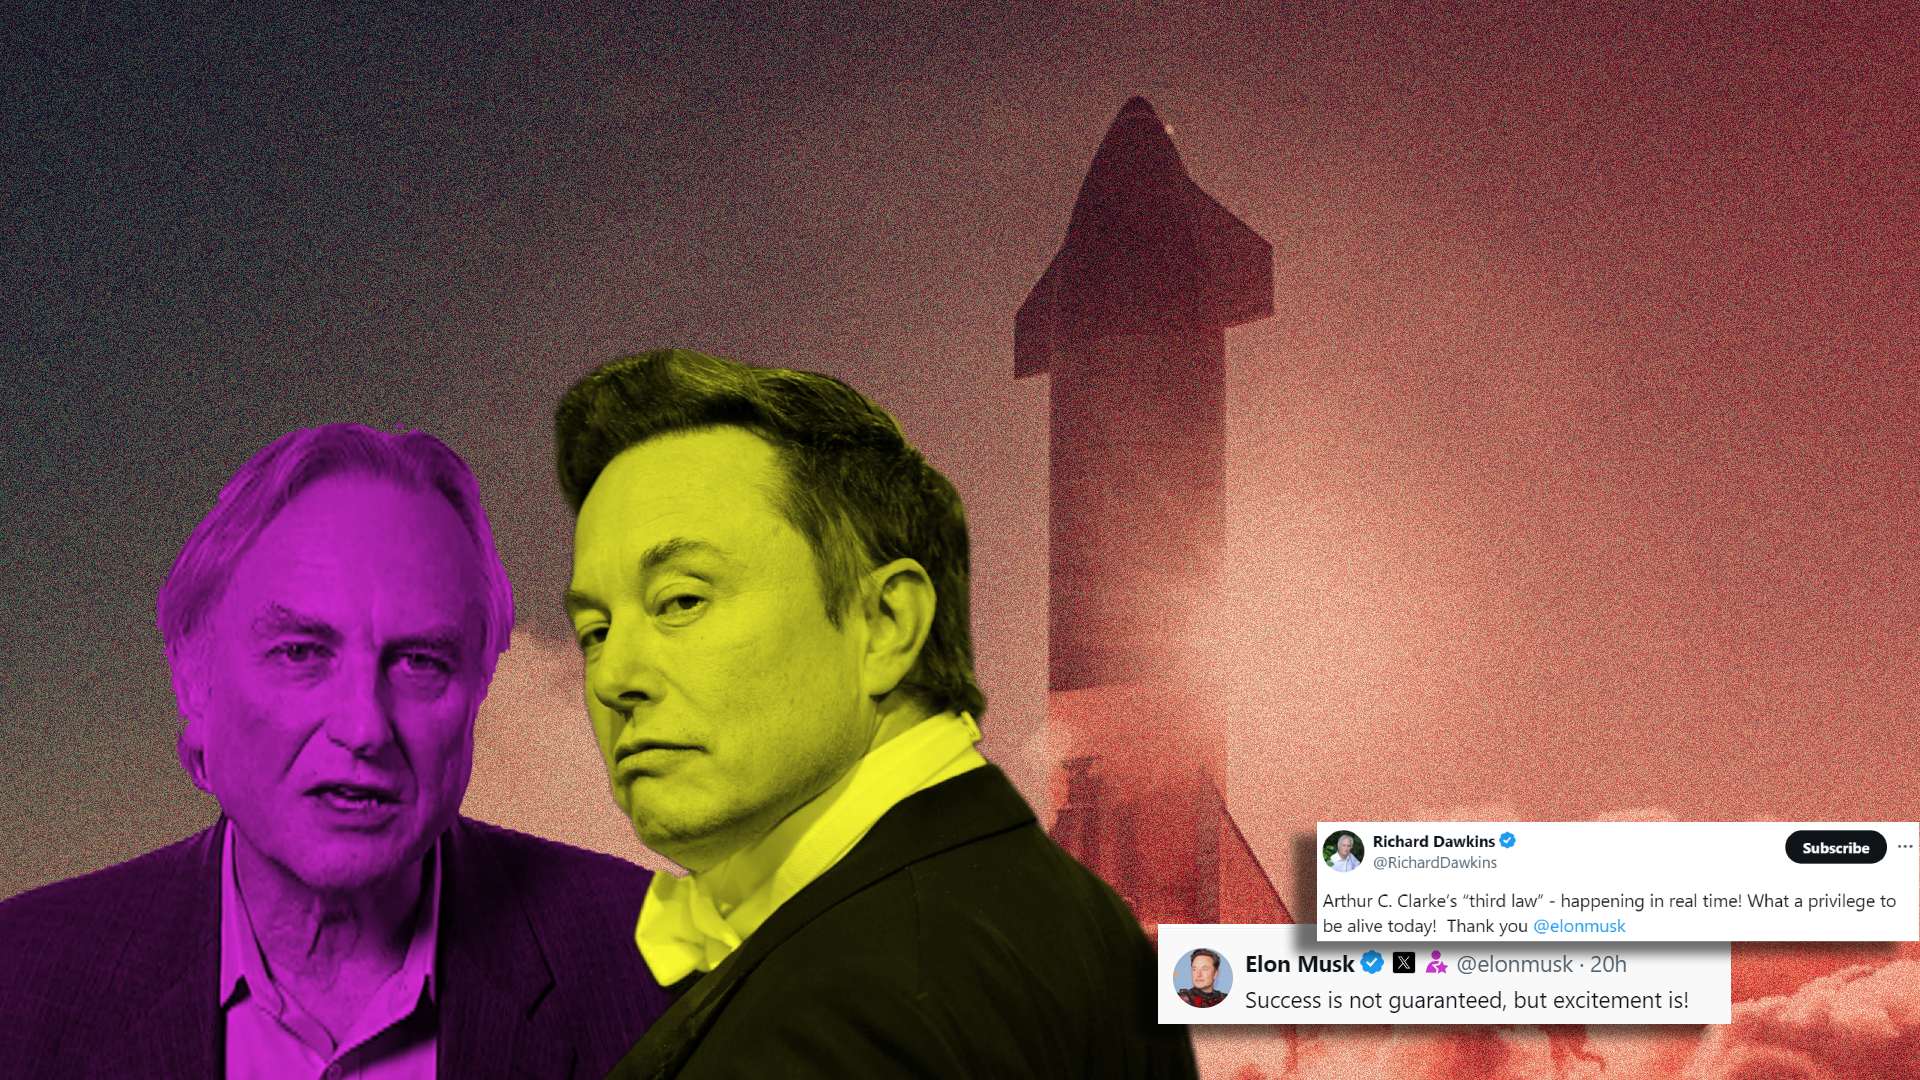 Richard Dawkins Praises Elon Musk Over SpaceXs Starship Feat; Billionaire Replies ‘Success Not Guaranteed But [Video]